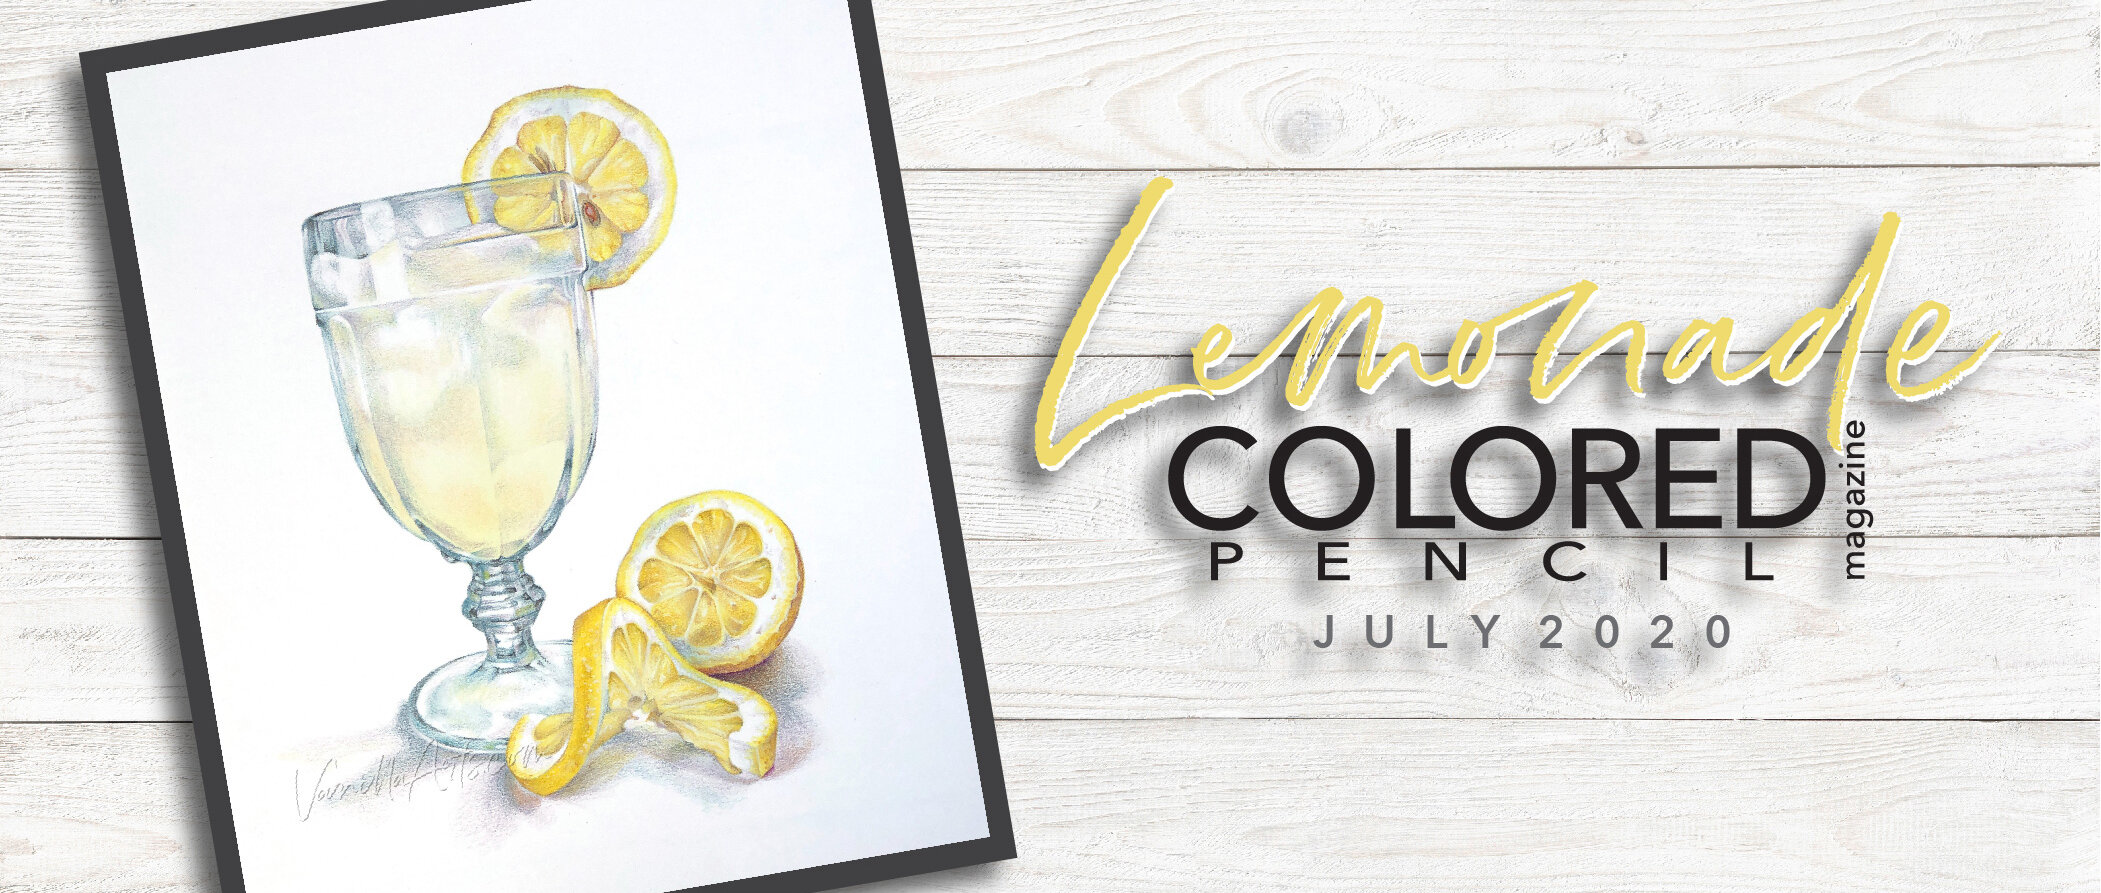 https://images.squarespace-cdn.com/content/v1/54ef7abde4b0b483325a0554/1591639491207-U7RJCMKJYRNFJ2RTSZQ7/Lemonade%2C+a+Copic+Marker+%26+Prismacolor+Premier+Colored+Pencil+tutorial.+Colored+Pencil+Magazine%2C+July+2020.+Amy+Shulke+shows+readers+her+efficient+process+to+achieve+realistic+glass+and+gentle+color.+%7C+VanillaArts.com+%7C+%23copicmarker+%23realisticcoloring+%23howtocolor